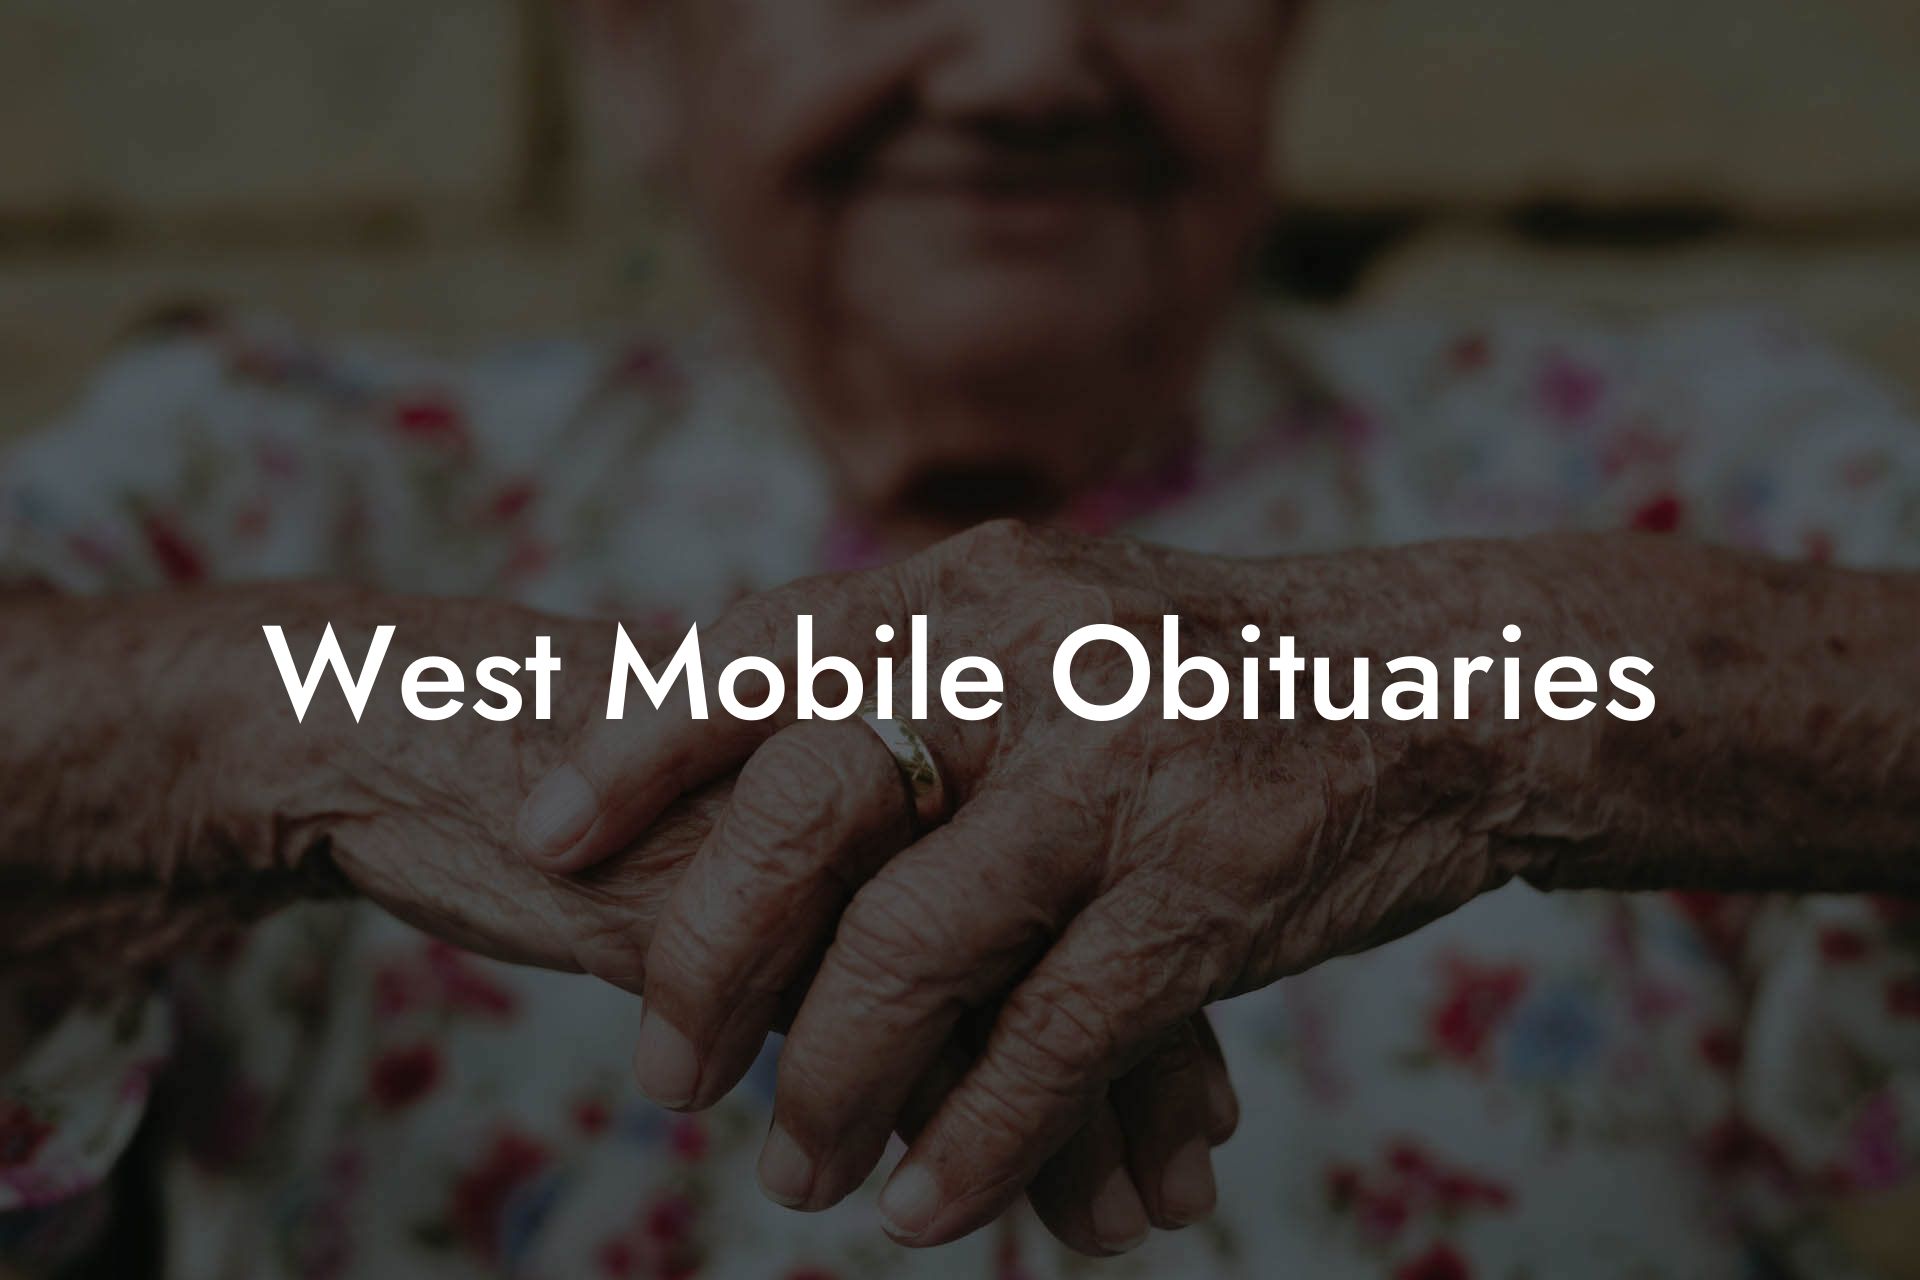 West Mobile Obituaries